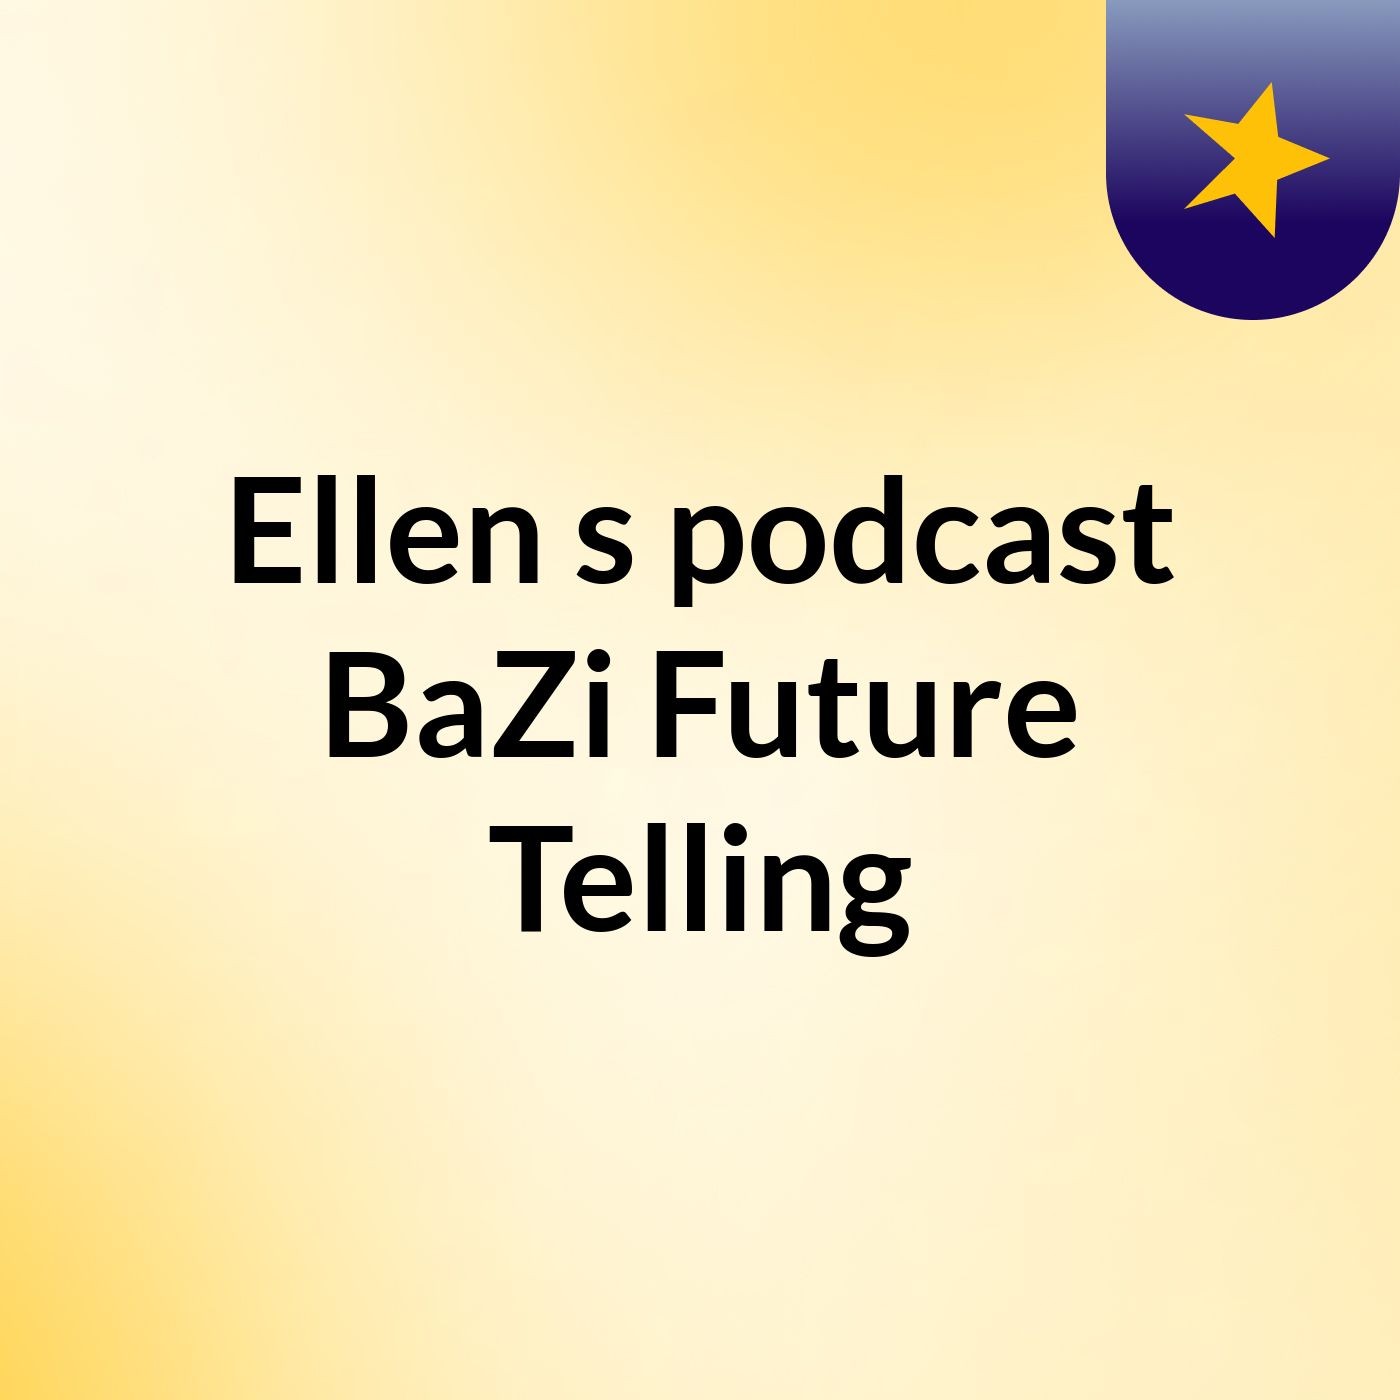 Episode 4 - Ellen's podcast BaZi Future Telling